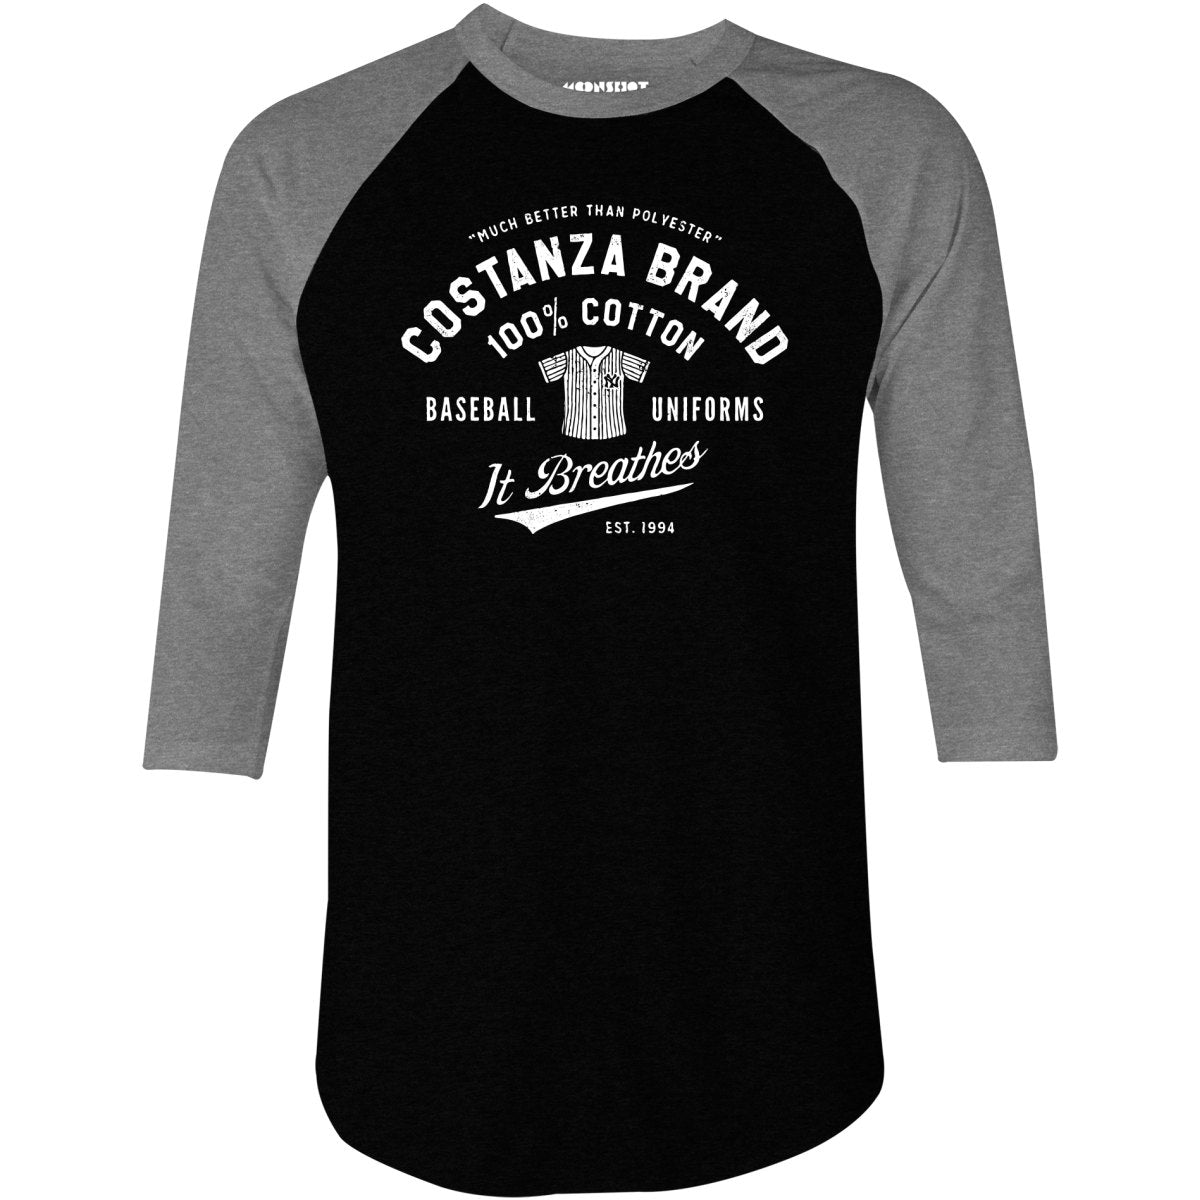 Costanza Brand Cotton Baseball Uniforms - 3/4 Sleeve Raglan T-Shirt